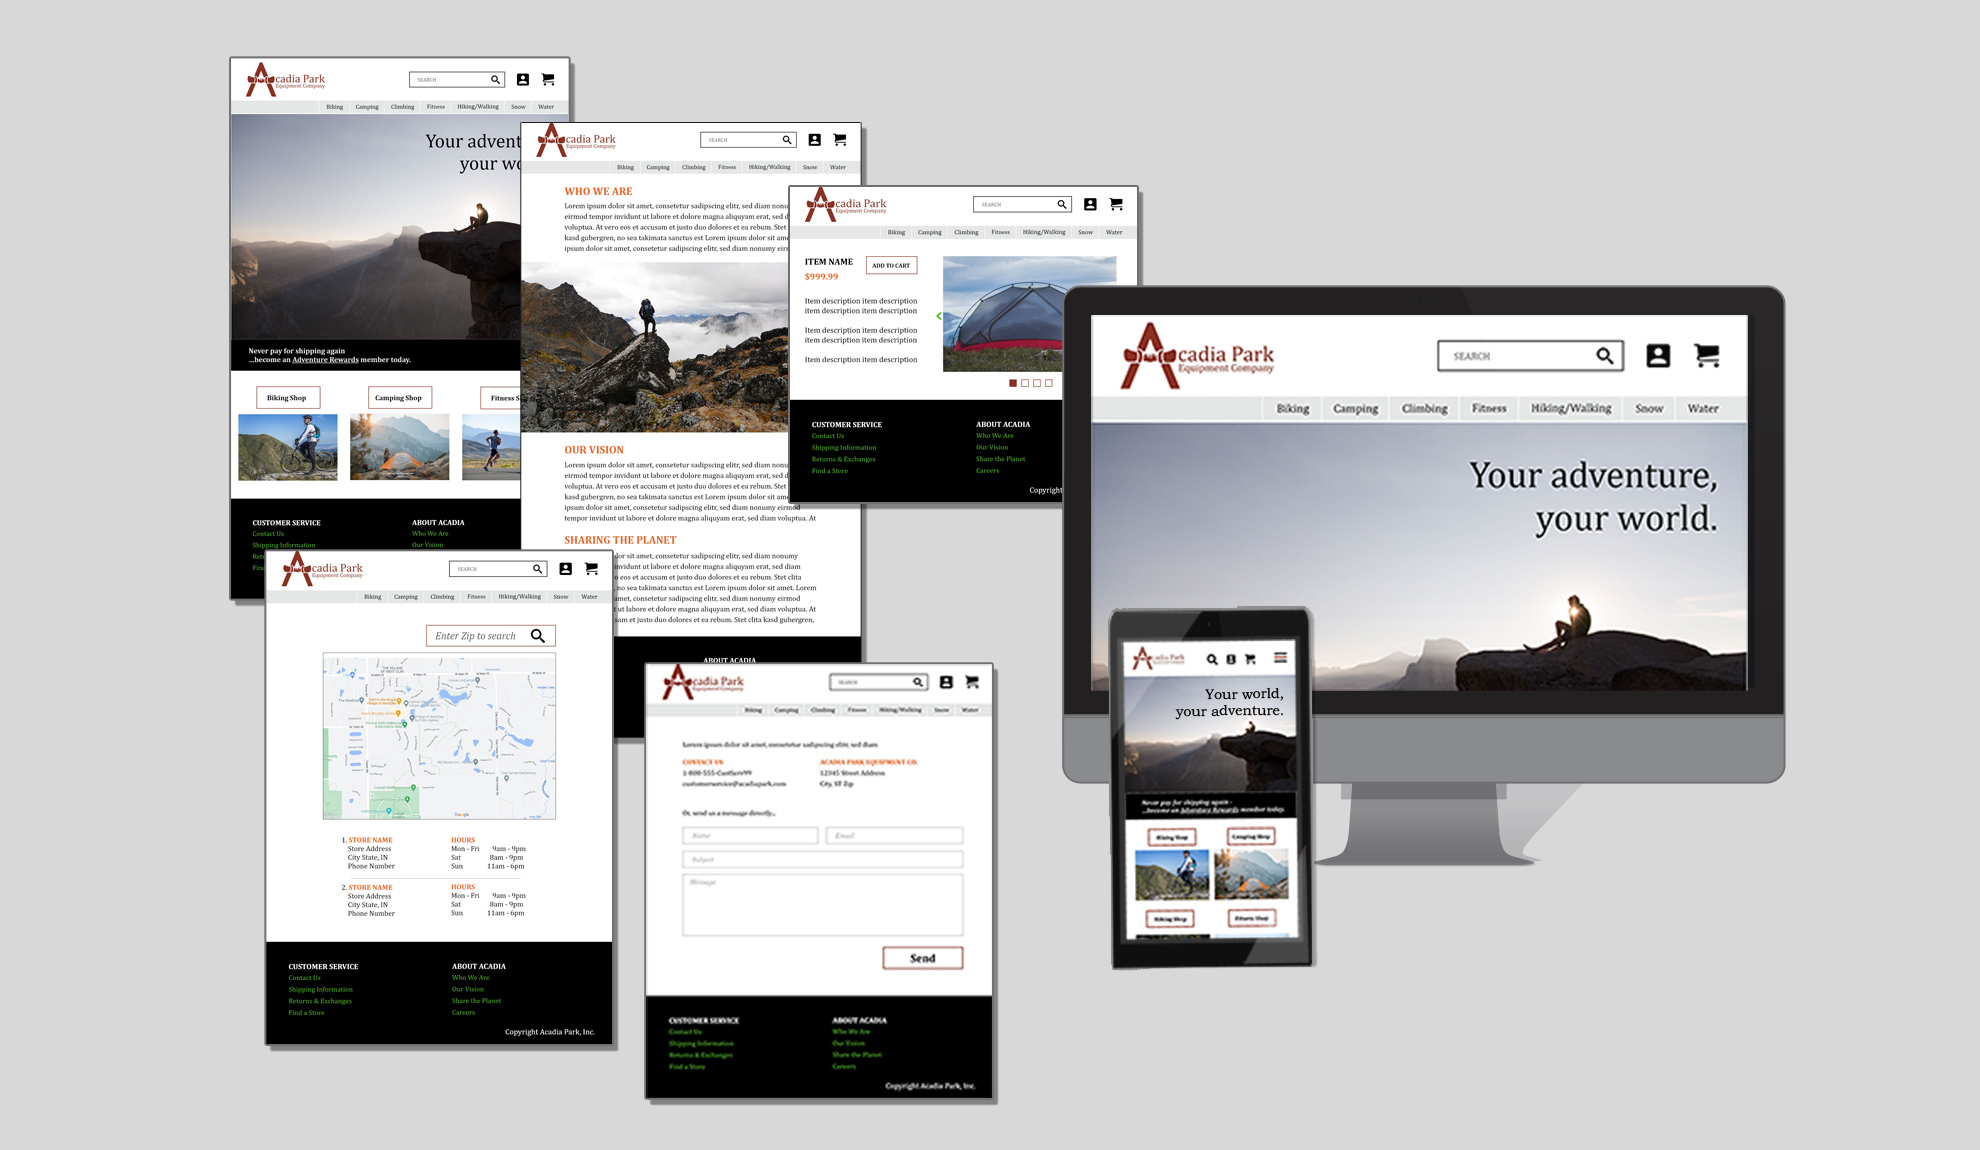 Acadia Park Website: Mobile, Tablet, and Desktop viewports